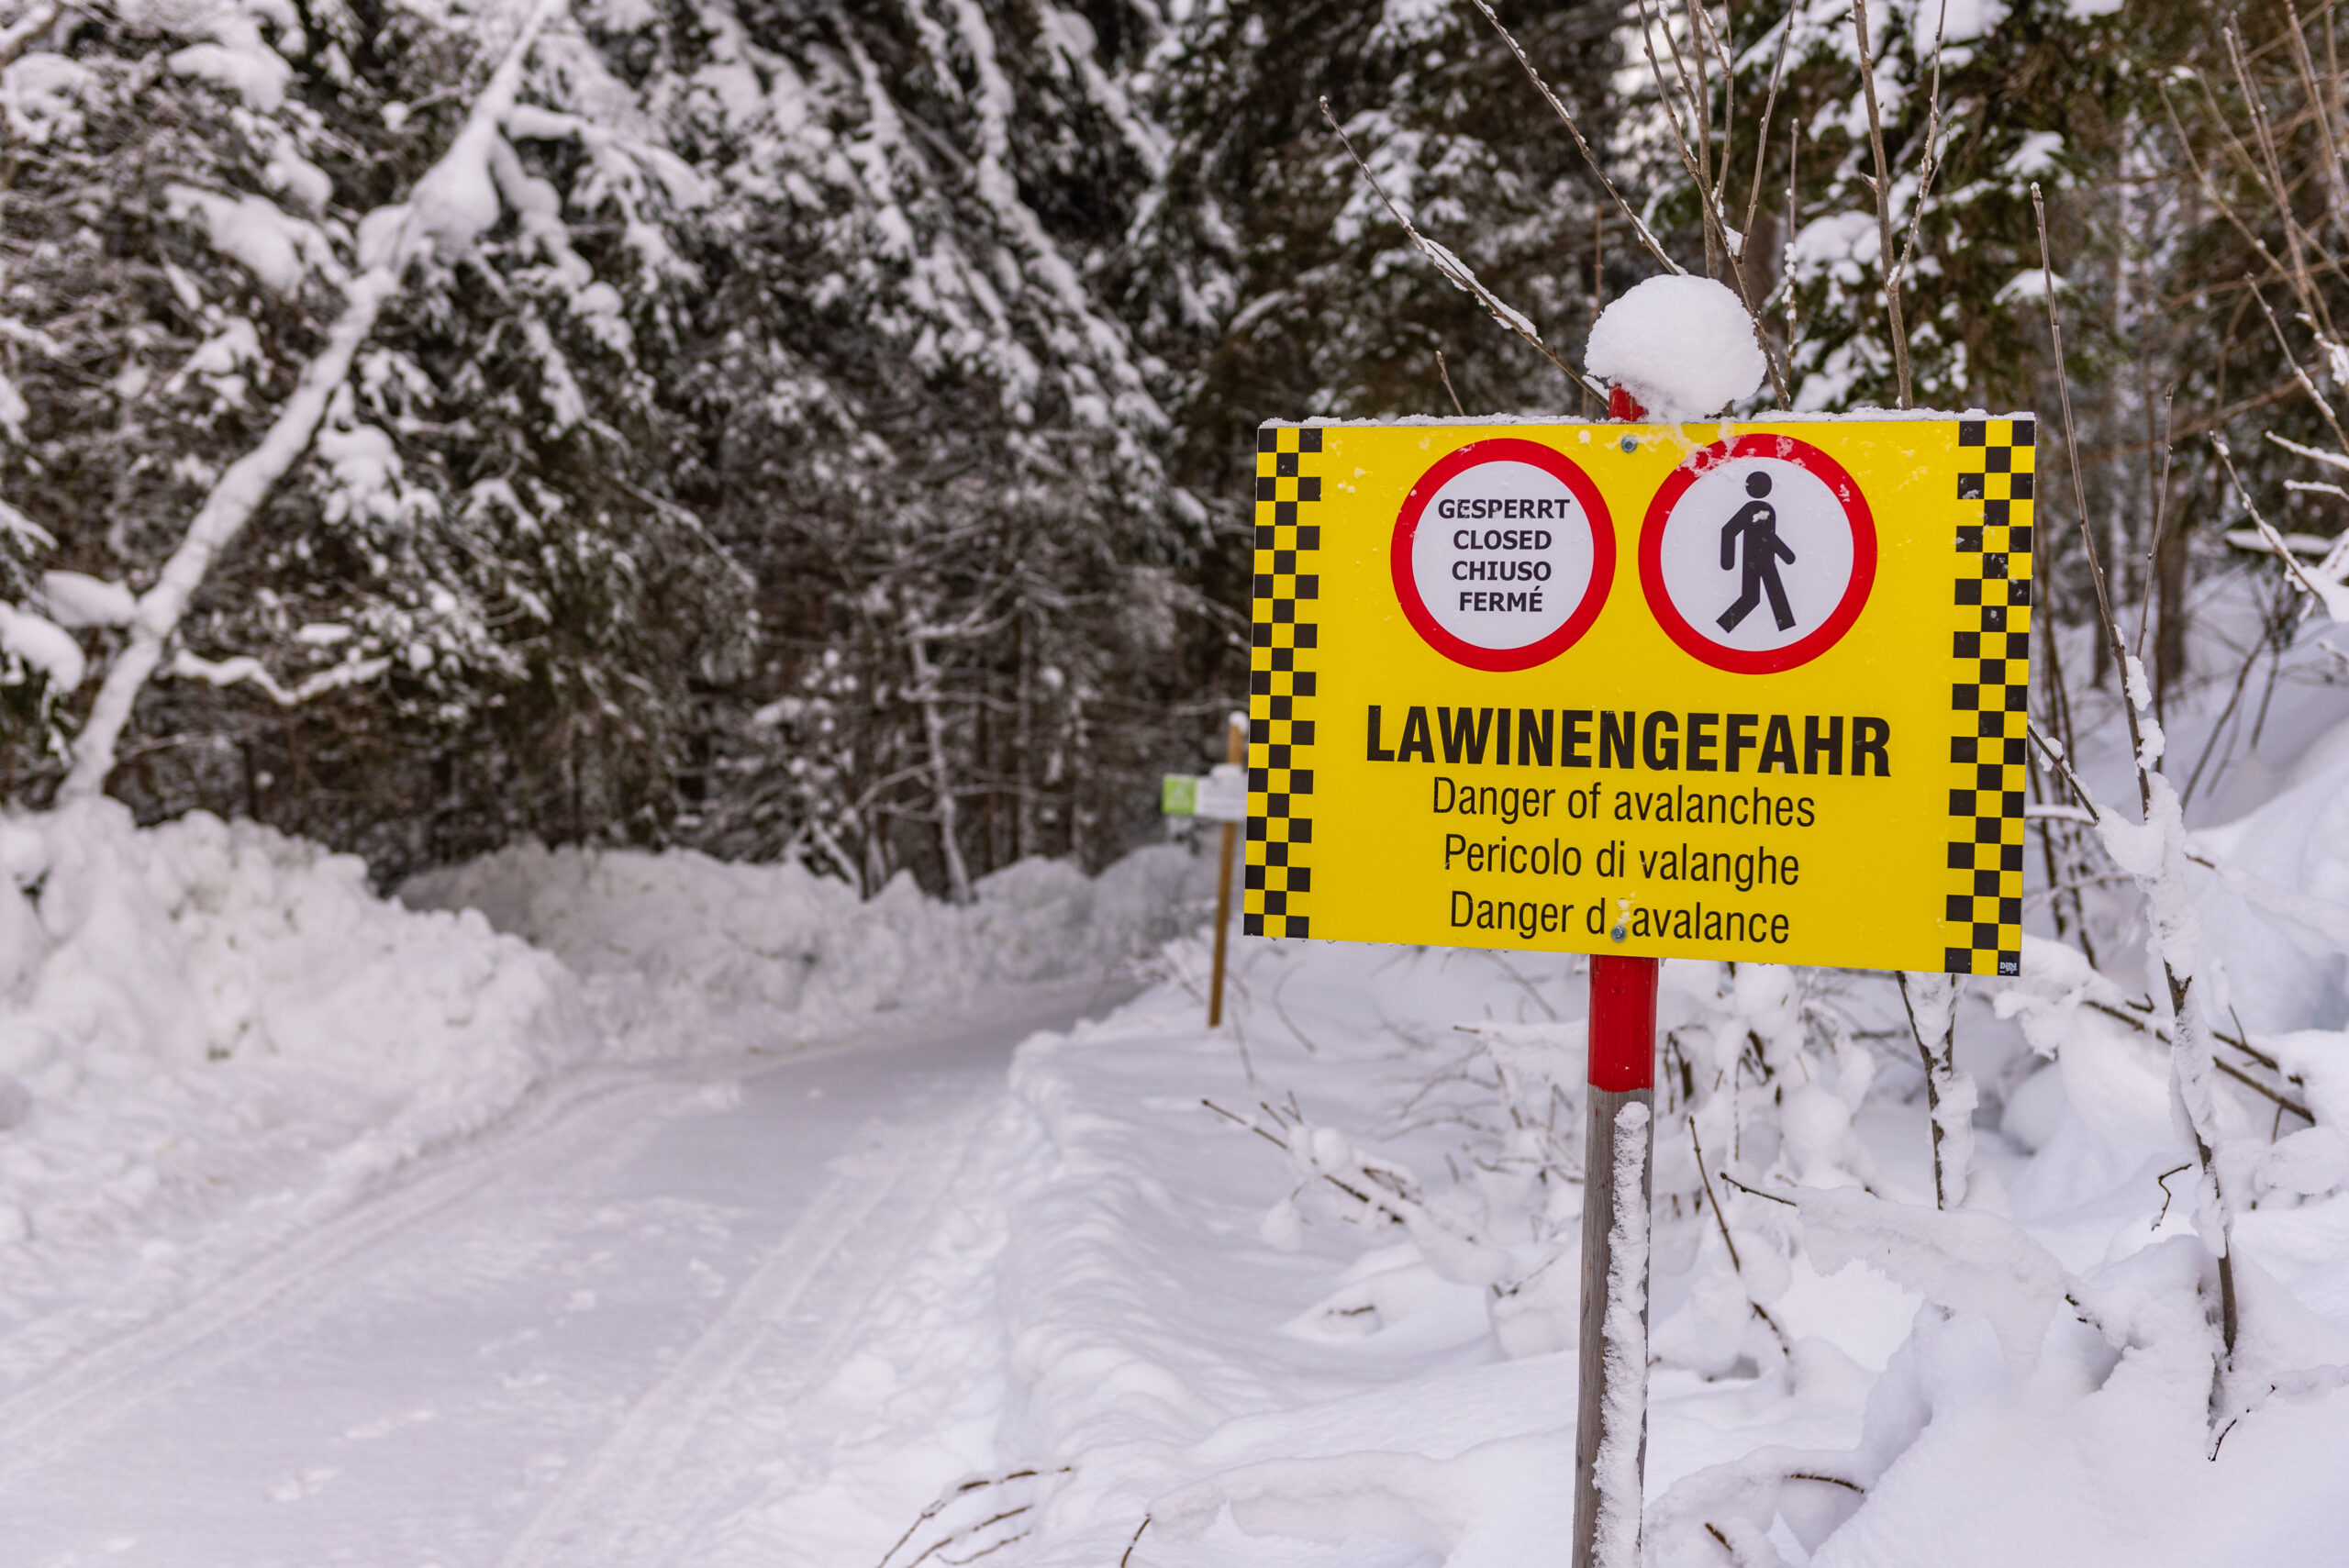 Avalancha en Austria deja 10 desaparecidos, según informes